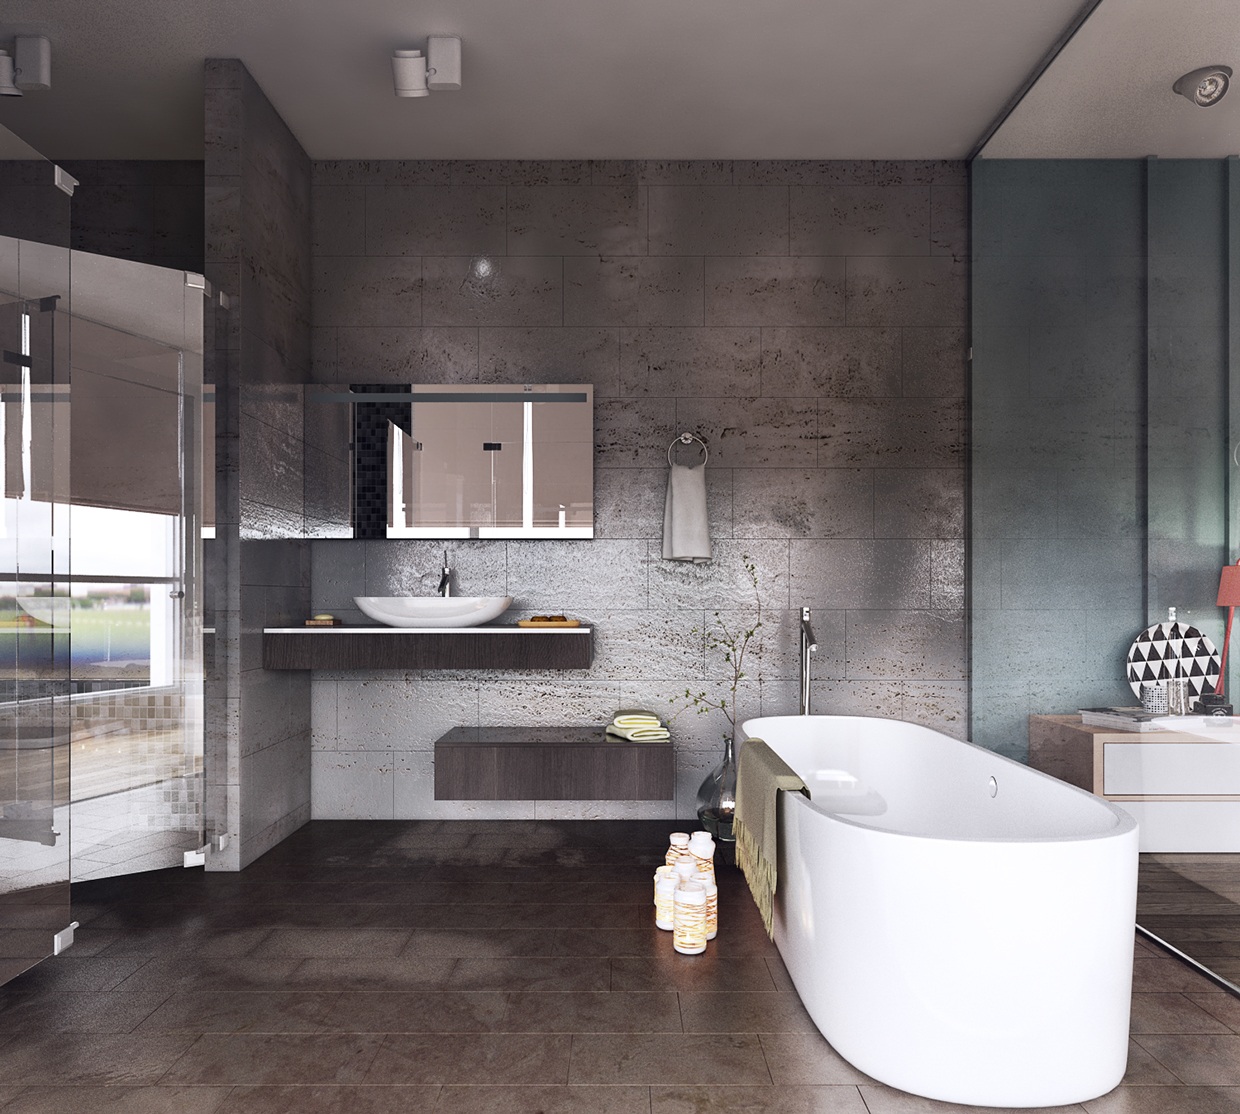 minimalist bathroom decor "width =" 1240 "height =" 1114 "srcset =" https://mileray.com/wp-content/uploads/2020/05/1588515756_973_Smart-Tips-Renovating-Spacious-Bathroom-Interior-Designs-With-Simple-and.jpg 1240w, https: / /mileray.com/wp-content/uploads/2016/10/modern-soaking-tub-Koj-Design-300x270.jpg 300w, https://mileray.com/wp-content/uploads/2016/10/modern - soaking-tub-Koj-Design-768x690.jpg 768w, https://mileray.com/wp-content/uploads/2016/10/modern-soaking-tub-Koj-Design-1024x920.jpg 1024w, https: / / mileray.com/wp-content/uploads/2016/10/modern-soaking-tub-Koj-Design-696x625.jpg 696w, https://mileray.com/wp-content/uploads/2016/10/modern- soaking tub -Koj-Design-1068x959.jpg 1068w, https://mileray.com/wp-content/uploads/2016/10/modern-soaking-tub-Koj-Design-468x420.jpg 468w "sizes =" (maximum width: 1240px) 100vw, 1240px